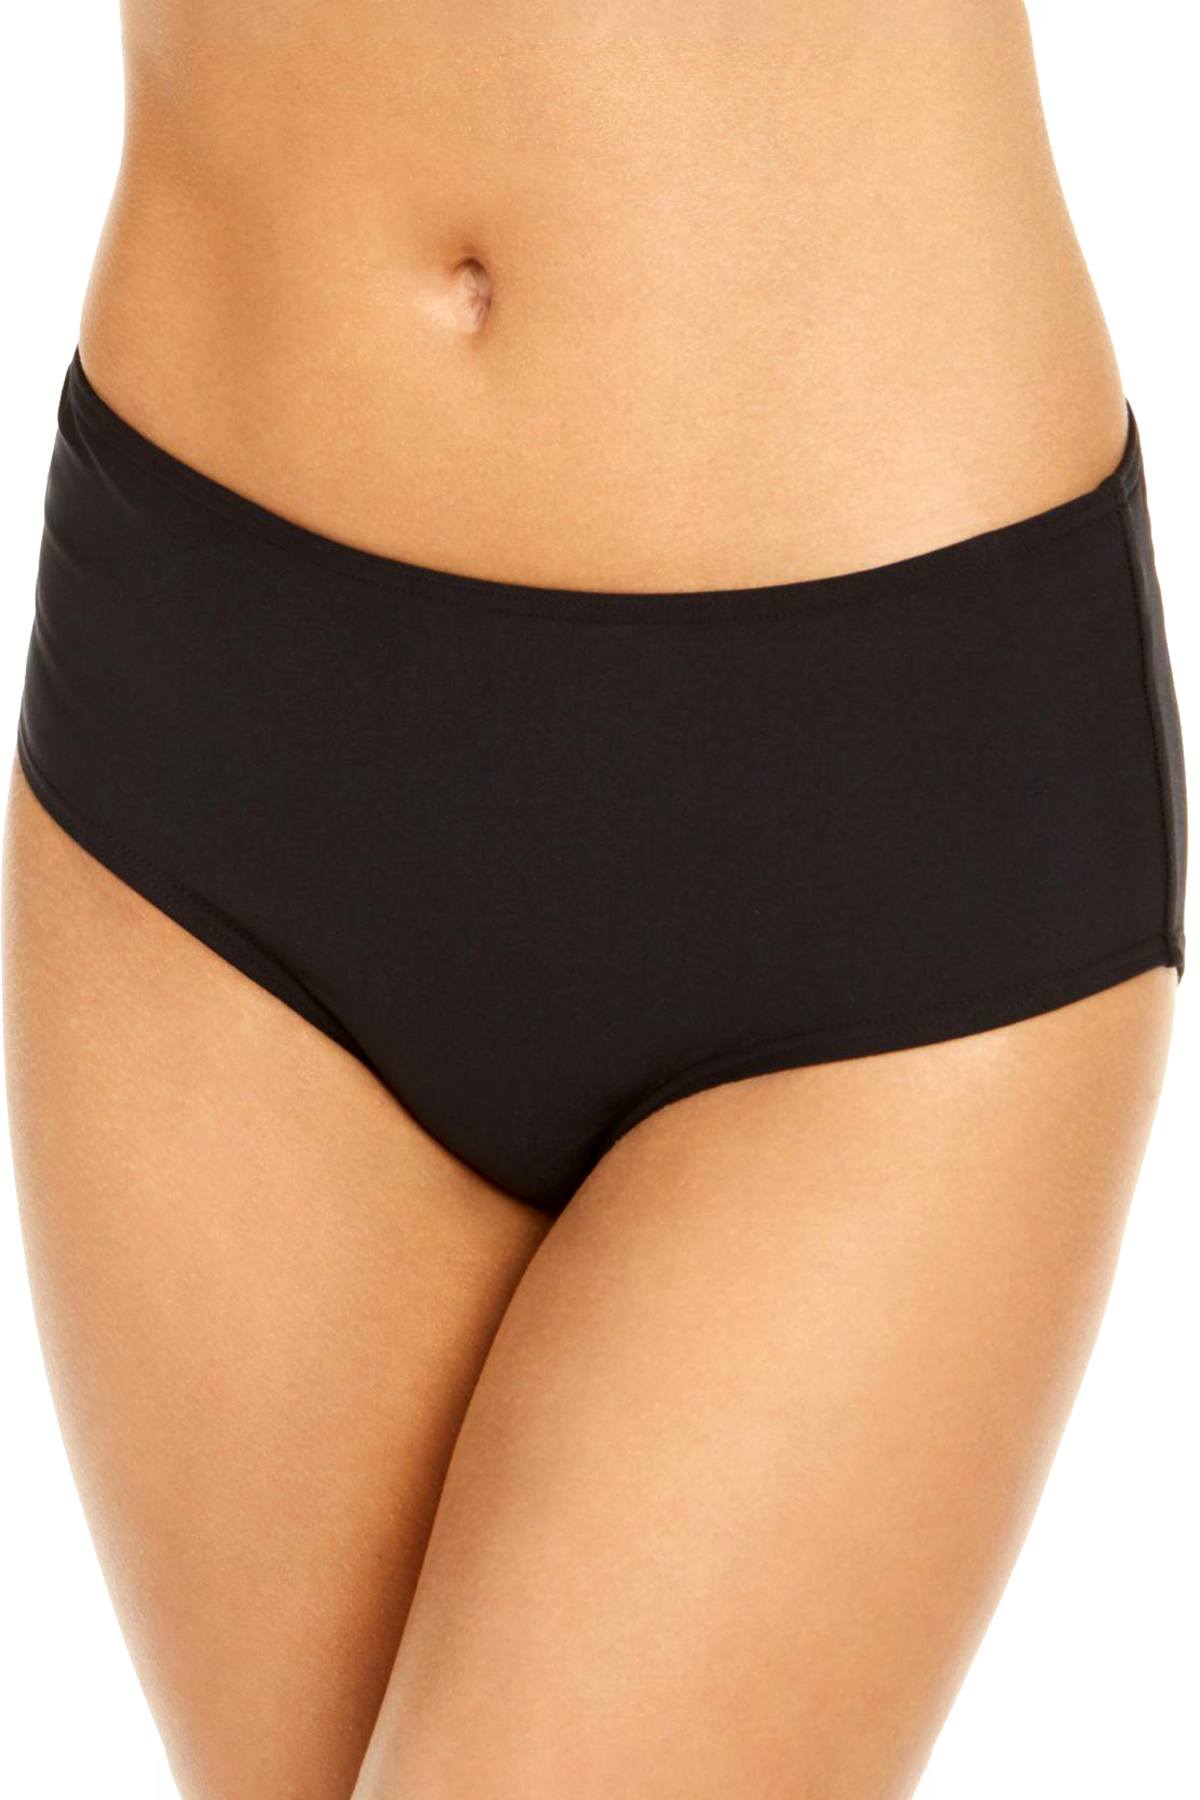 Calvin Klein Black Mid-Rise Tummy Control Bikini Bottom